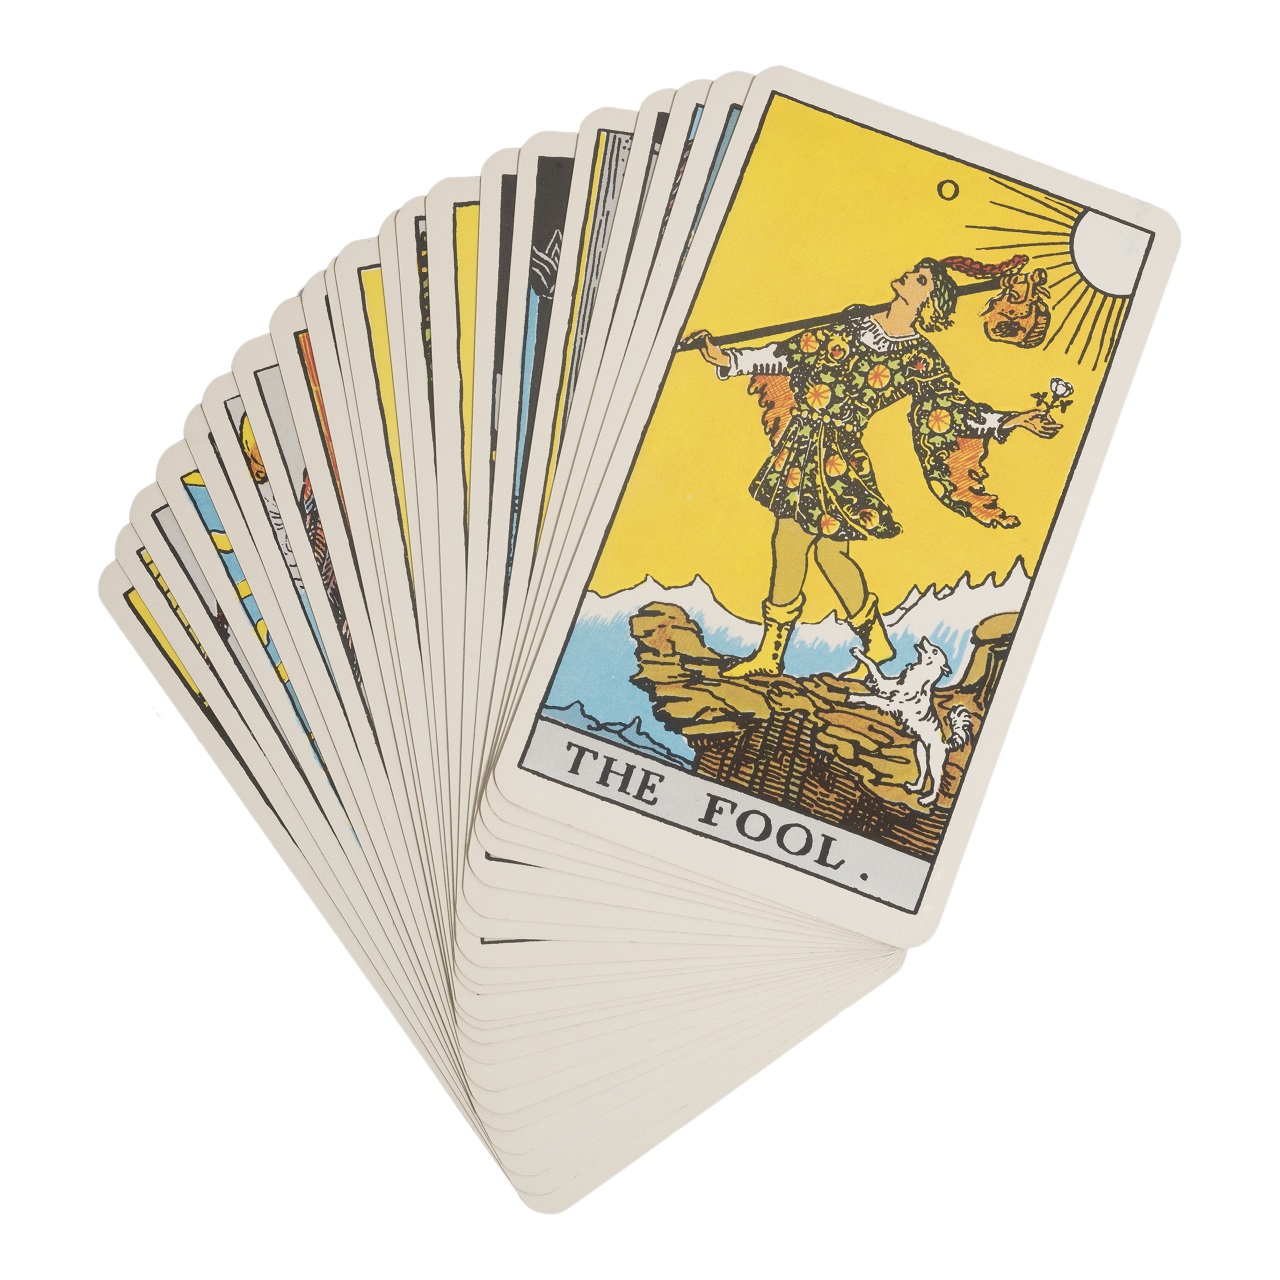 All 78 Tarot Cards List in Order (Major and Minor Arcana)